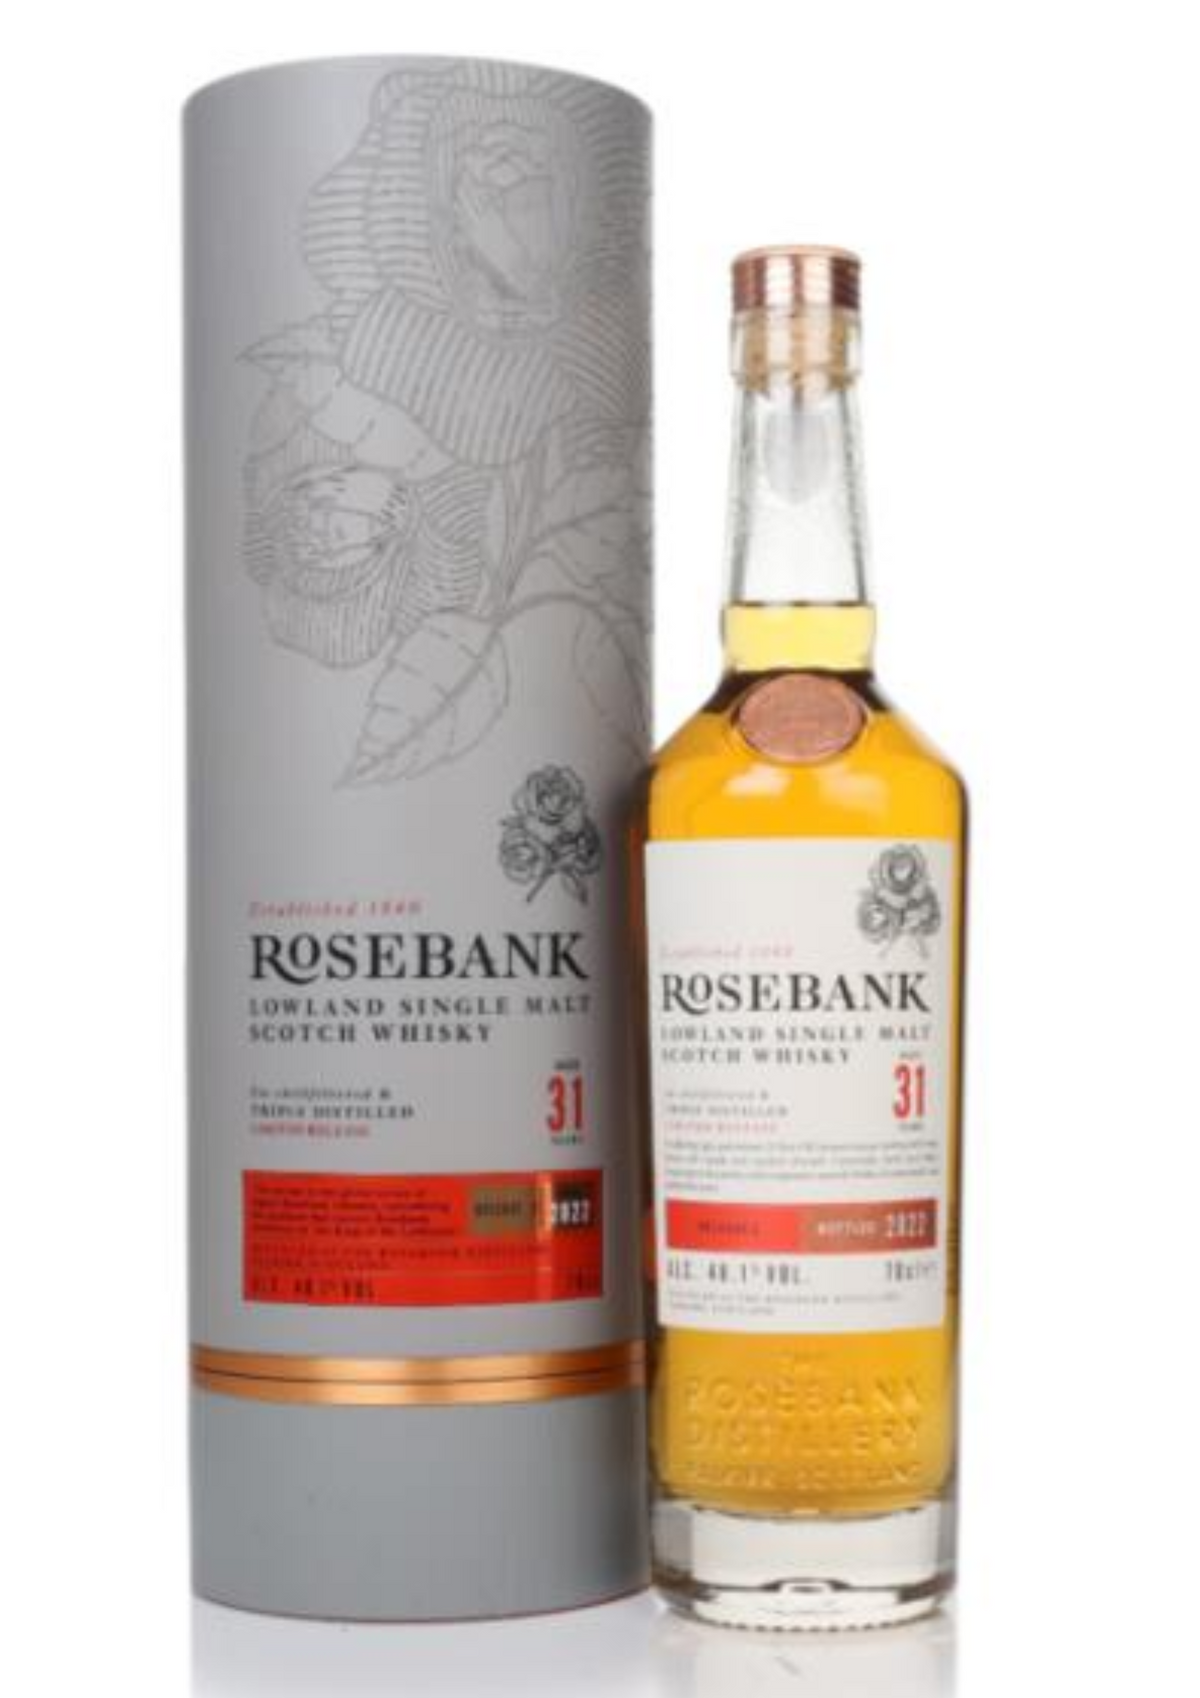 Rosebank 31-Year-Old Lowland Single Malt Scotch Whisky, 48.1%